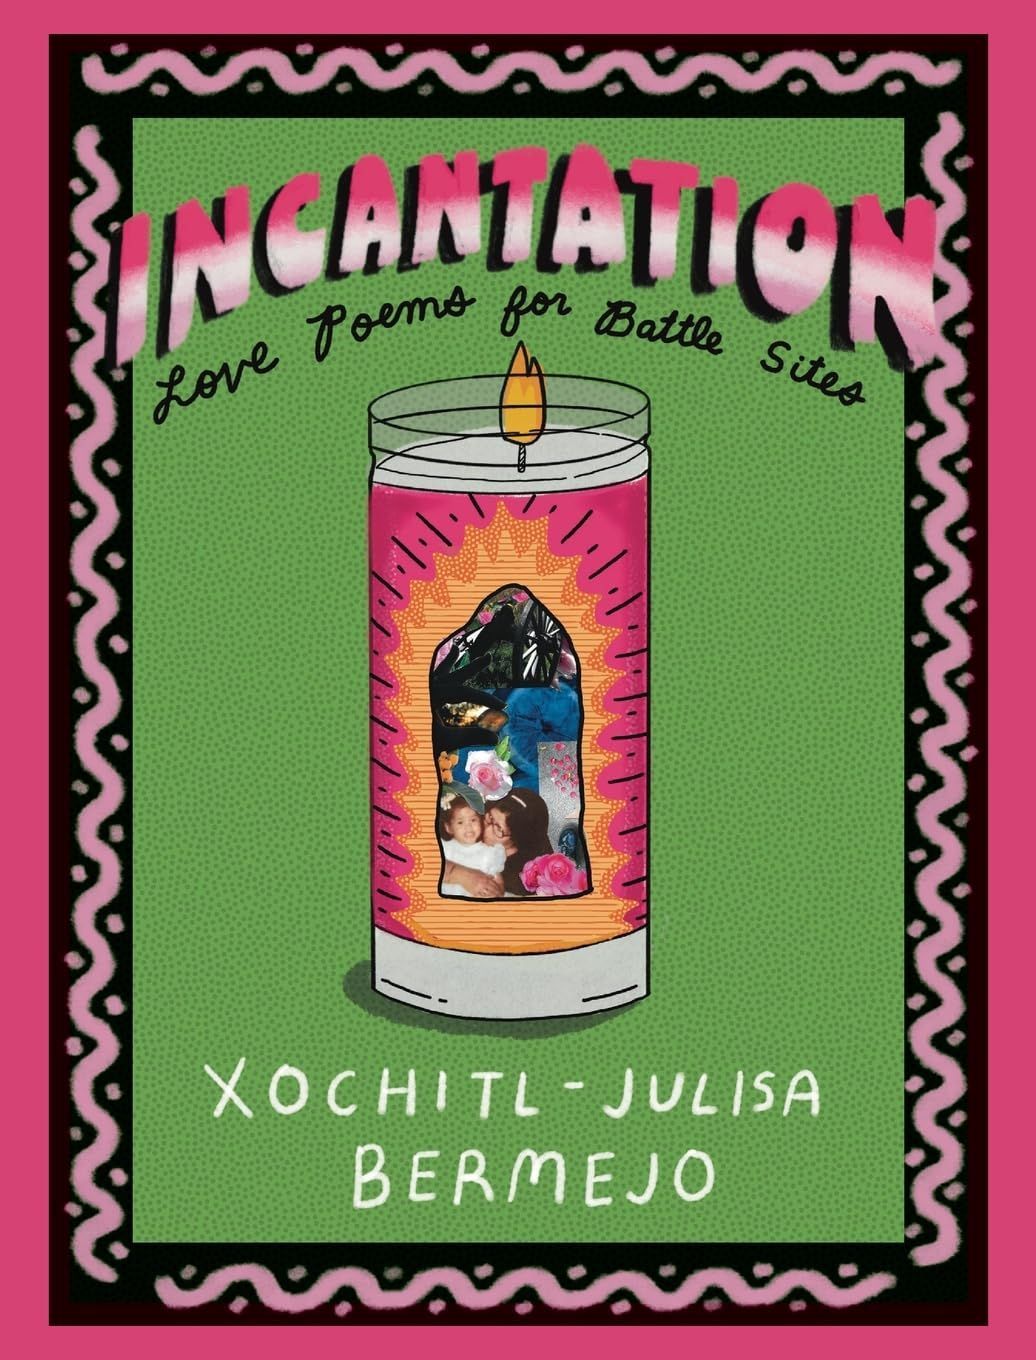 Begin Again: On Xochitl-Julisa Bermejo’s “Incantation”